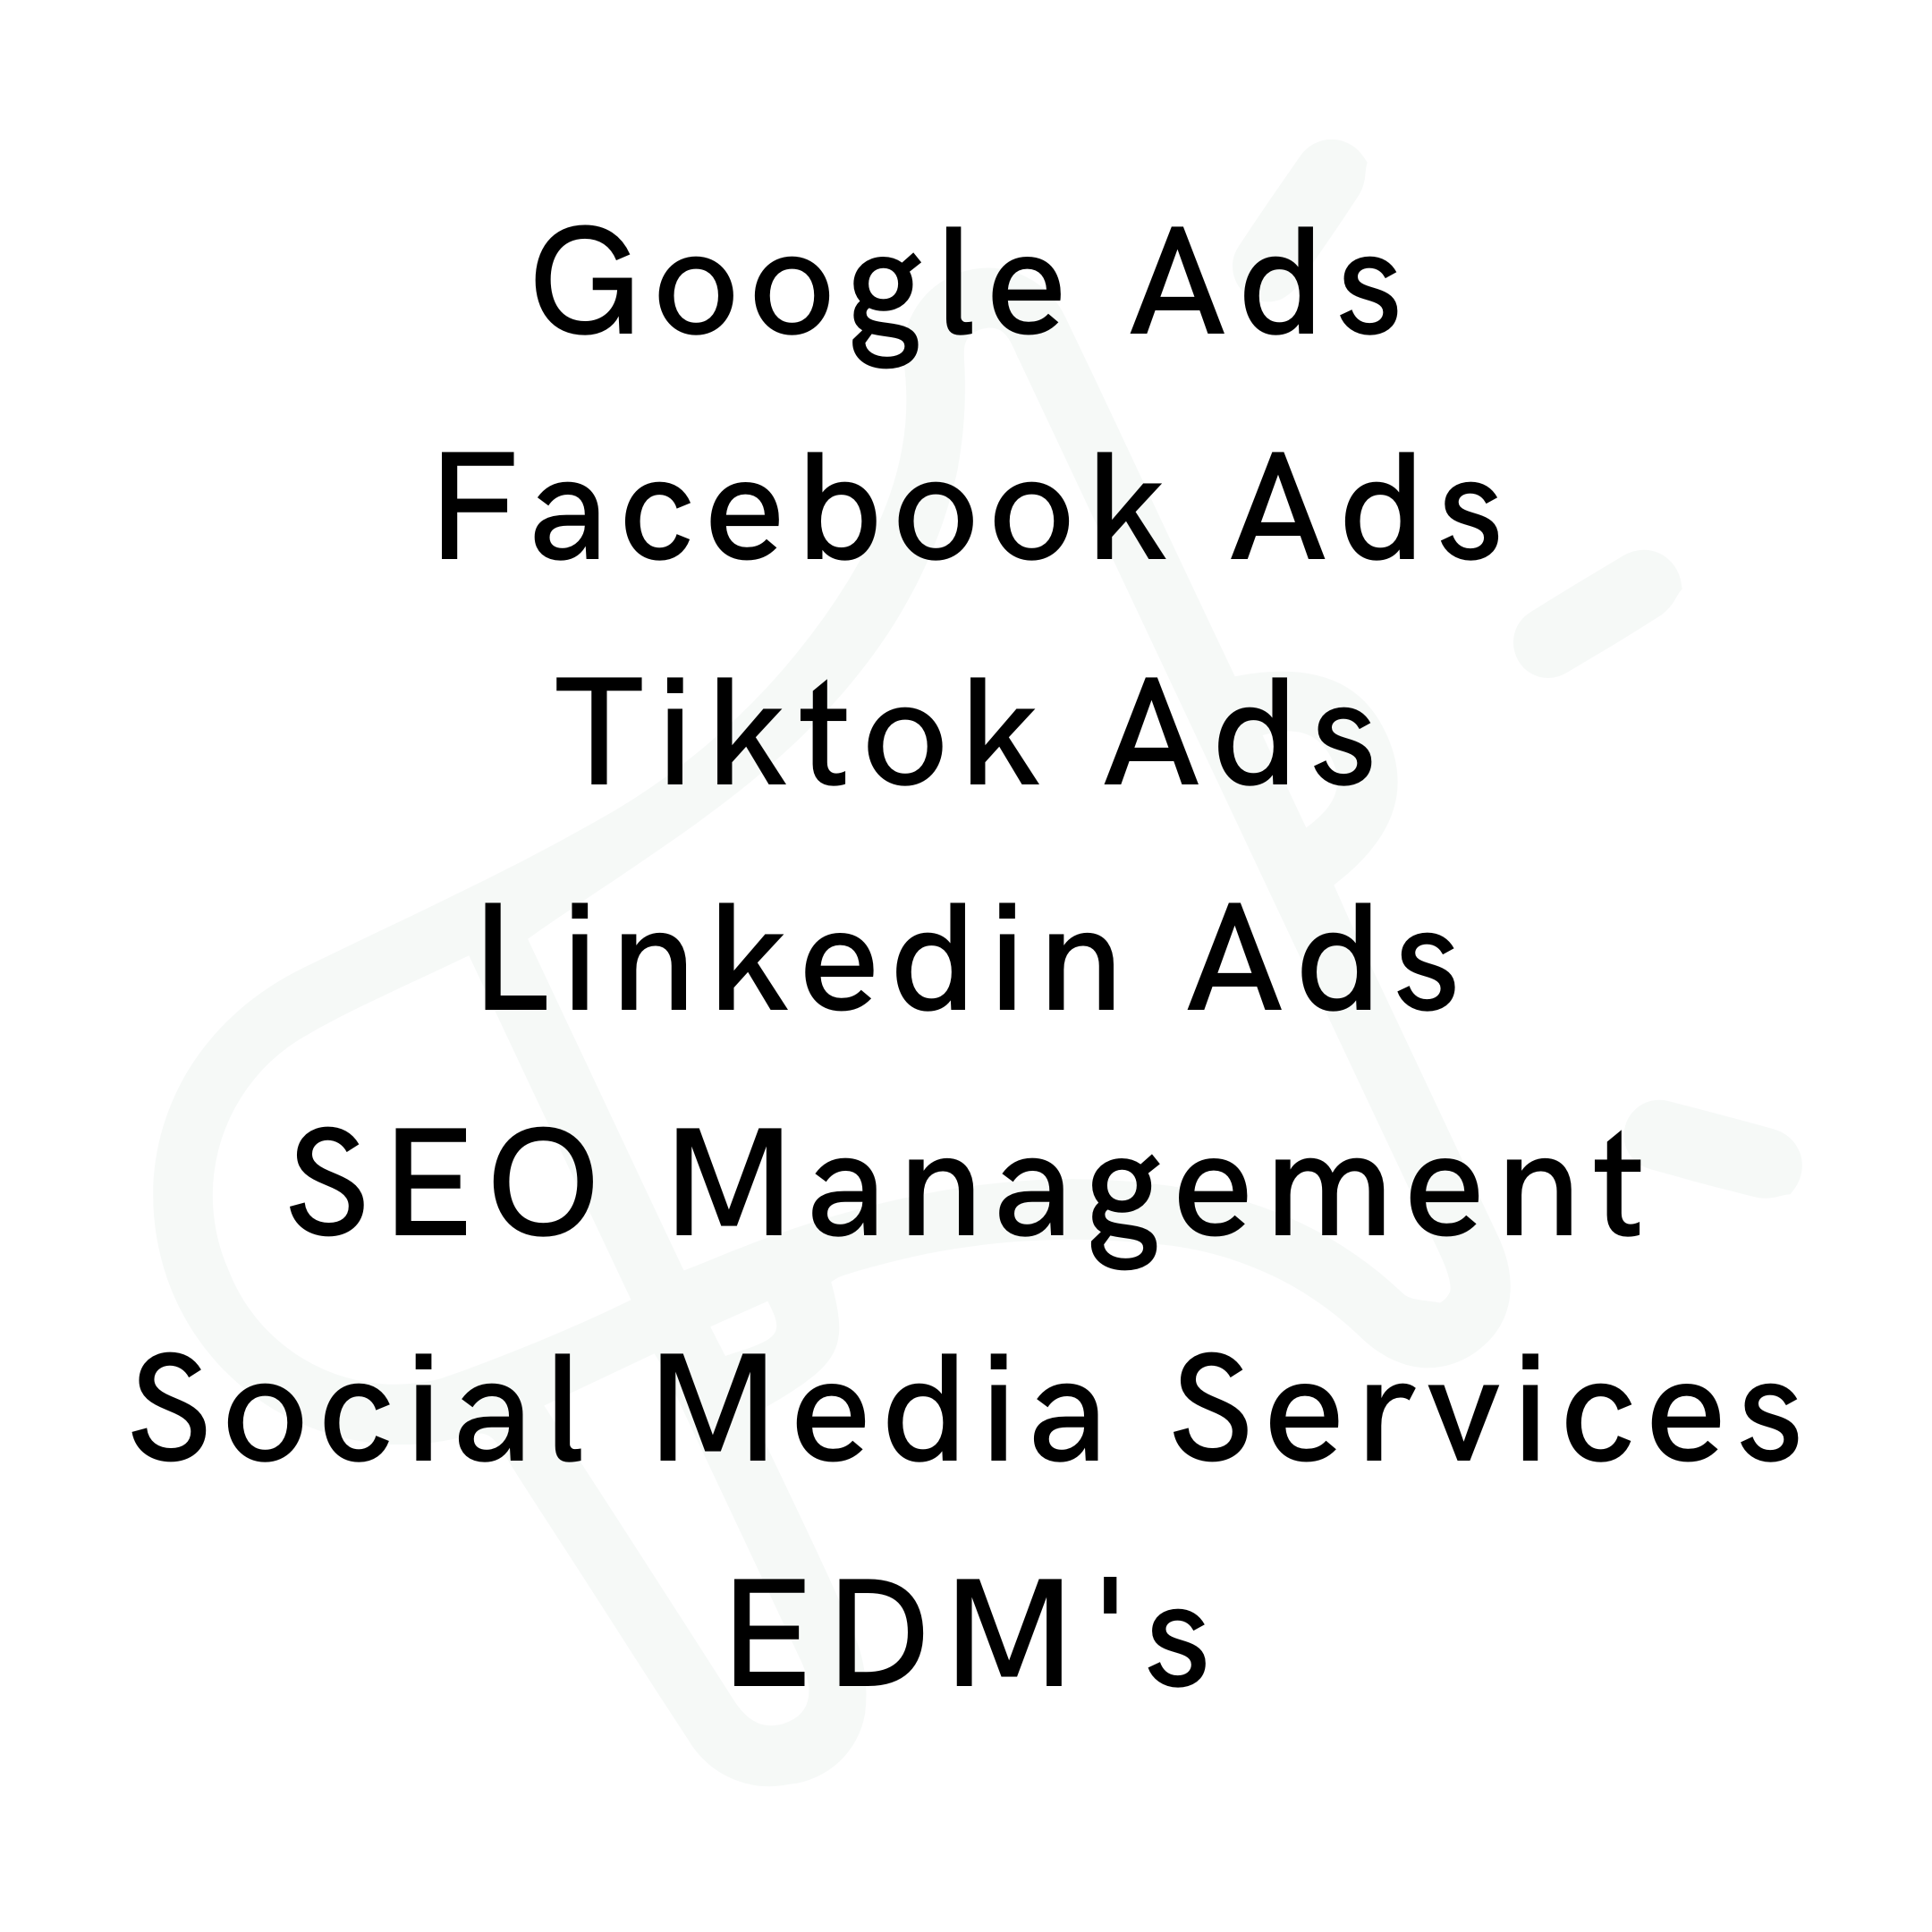 Google Ads Facebook Ads Tiktok Ads Linkedin Ads SEO Work Social Media Services EDM's